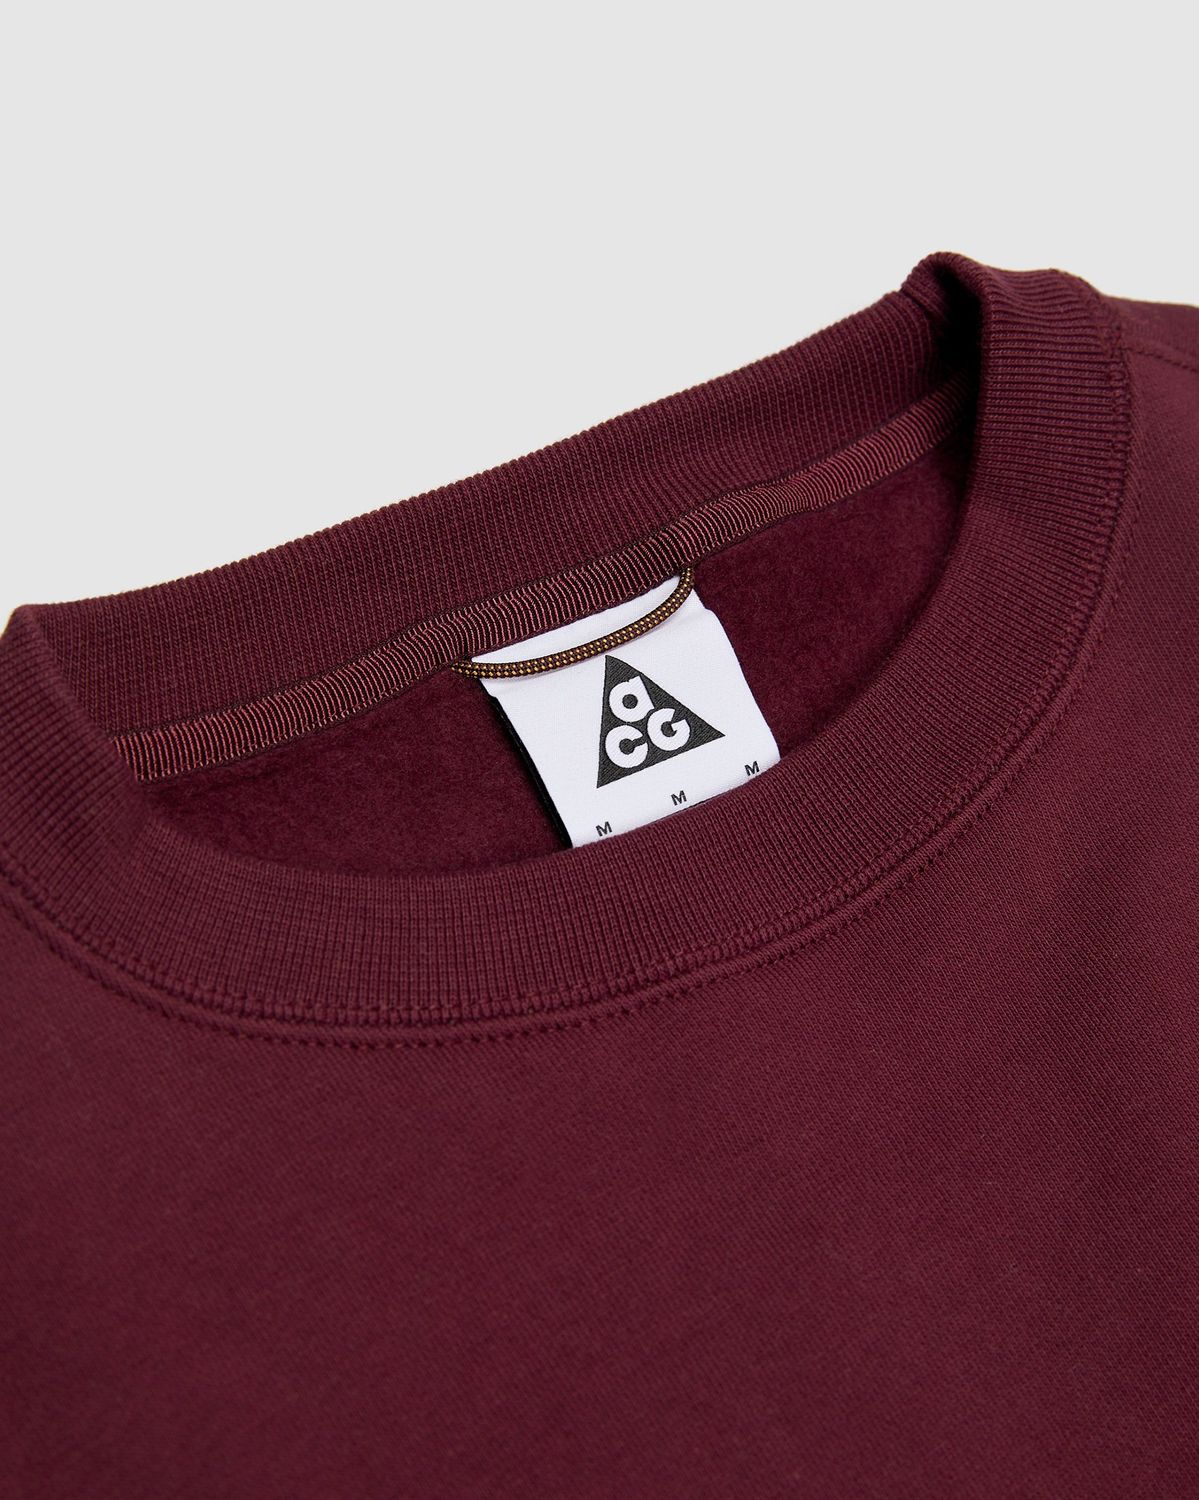 Nike ACG – Allover Print Crew Sweater Burgundy - Sweats - Red - Image 3